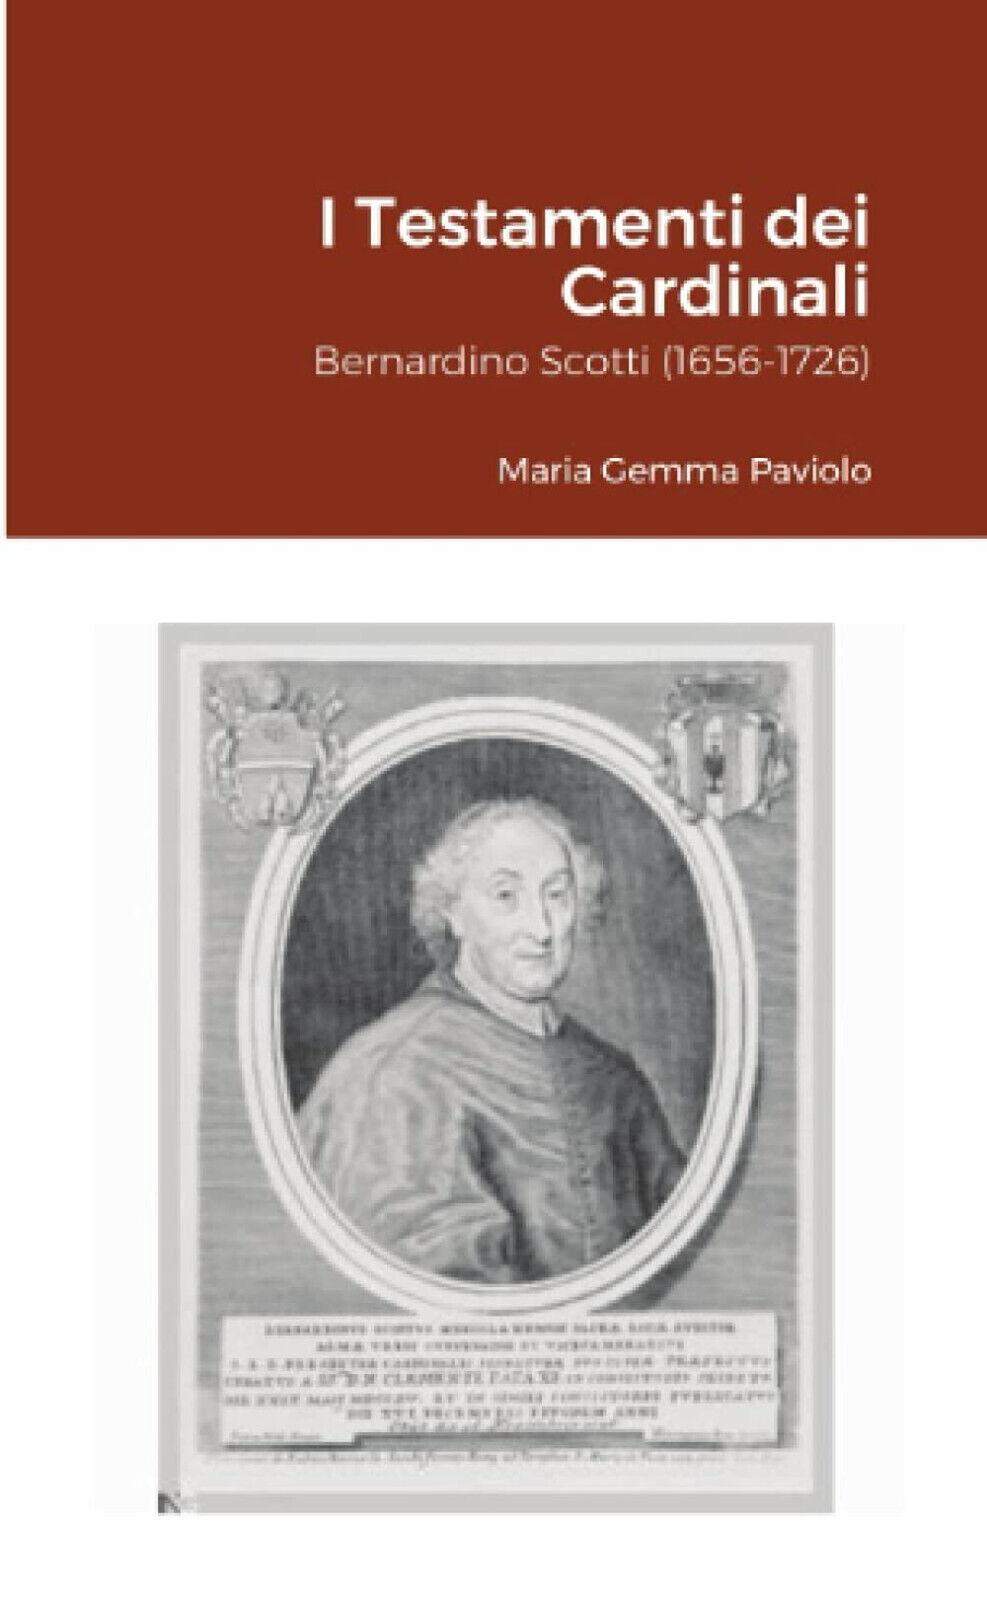 I Testamenti dei Cardinali: Bernardino Scotti (1656-1726) - lulu.com, 2021